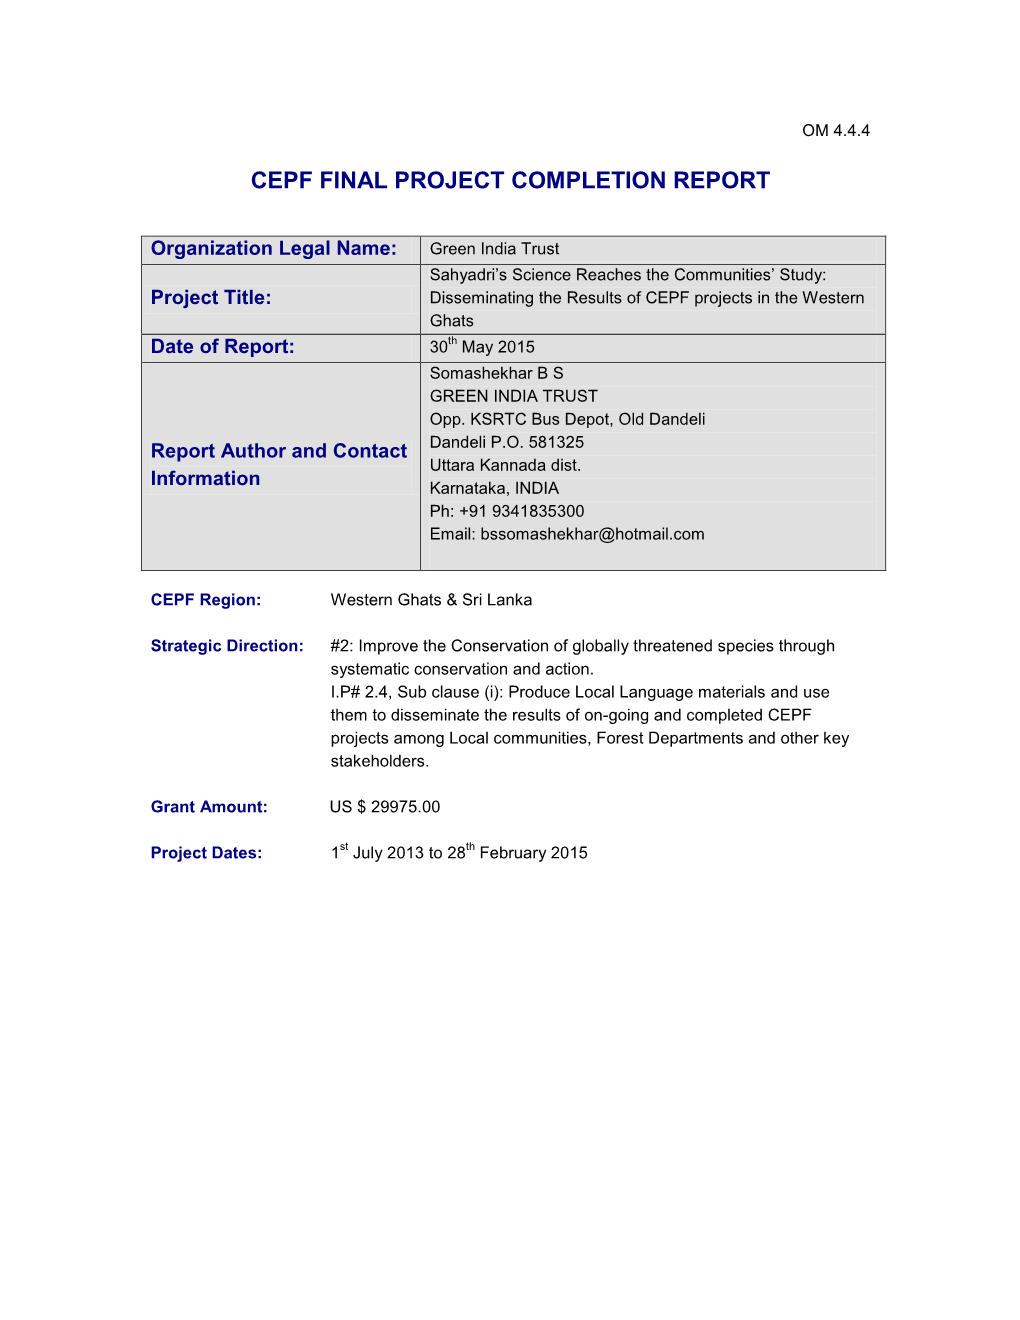 Final Project Report English Pdf 309.04 KB